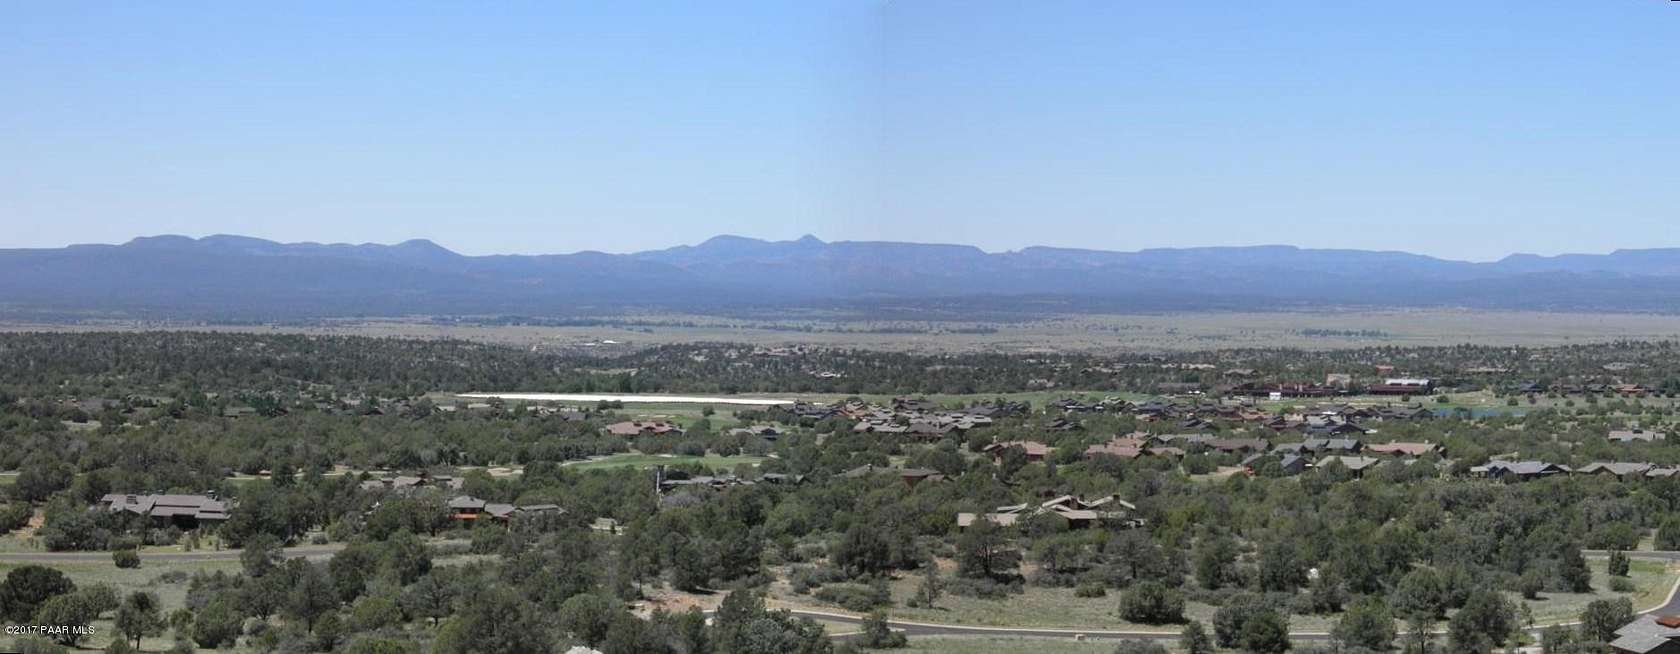 5.5 Acres of Residential Land for Sale in Prescott, Arizona